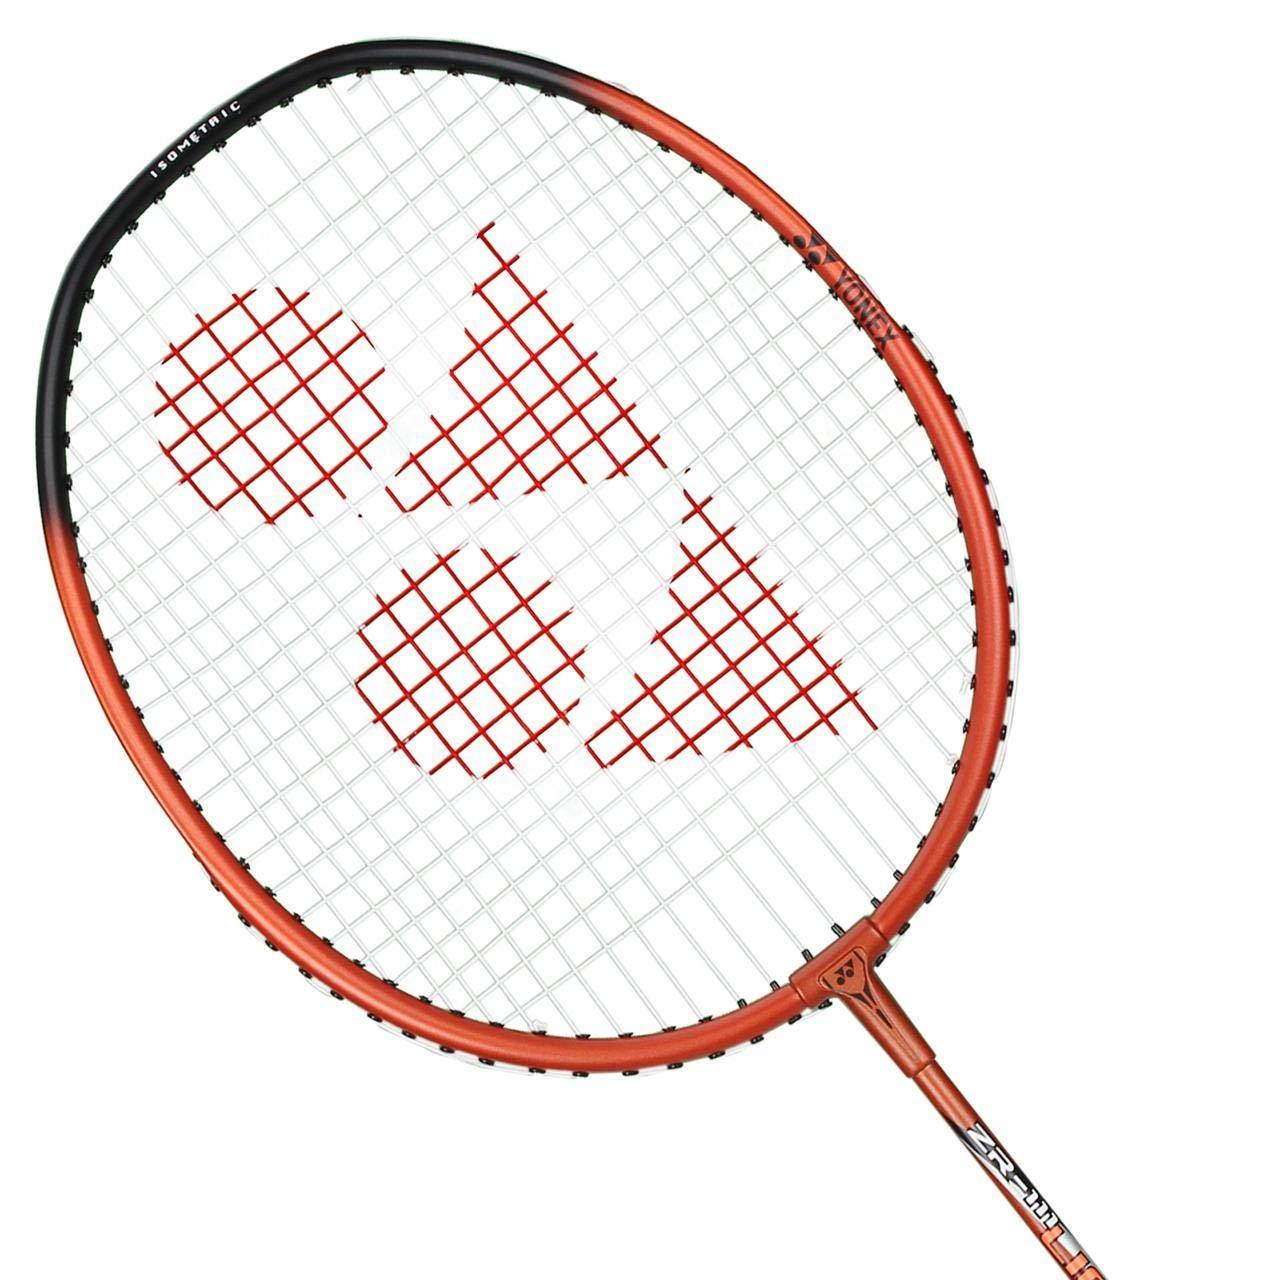 Yonex ZR 111 Light Strung Badminton Racquet, Orange (Full Cover) - Set of 2 Racquets - Best Price online Prokicksports.com